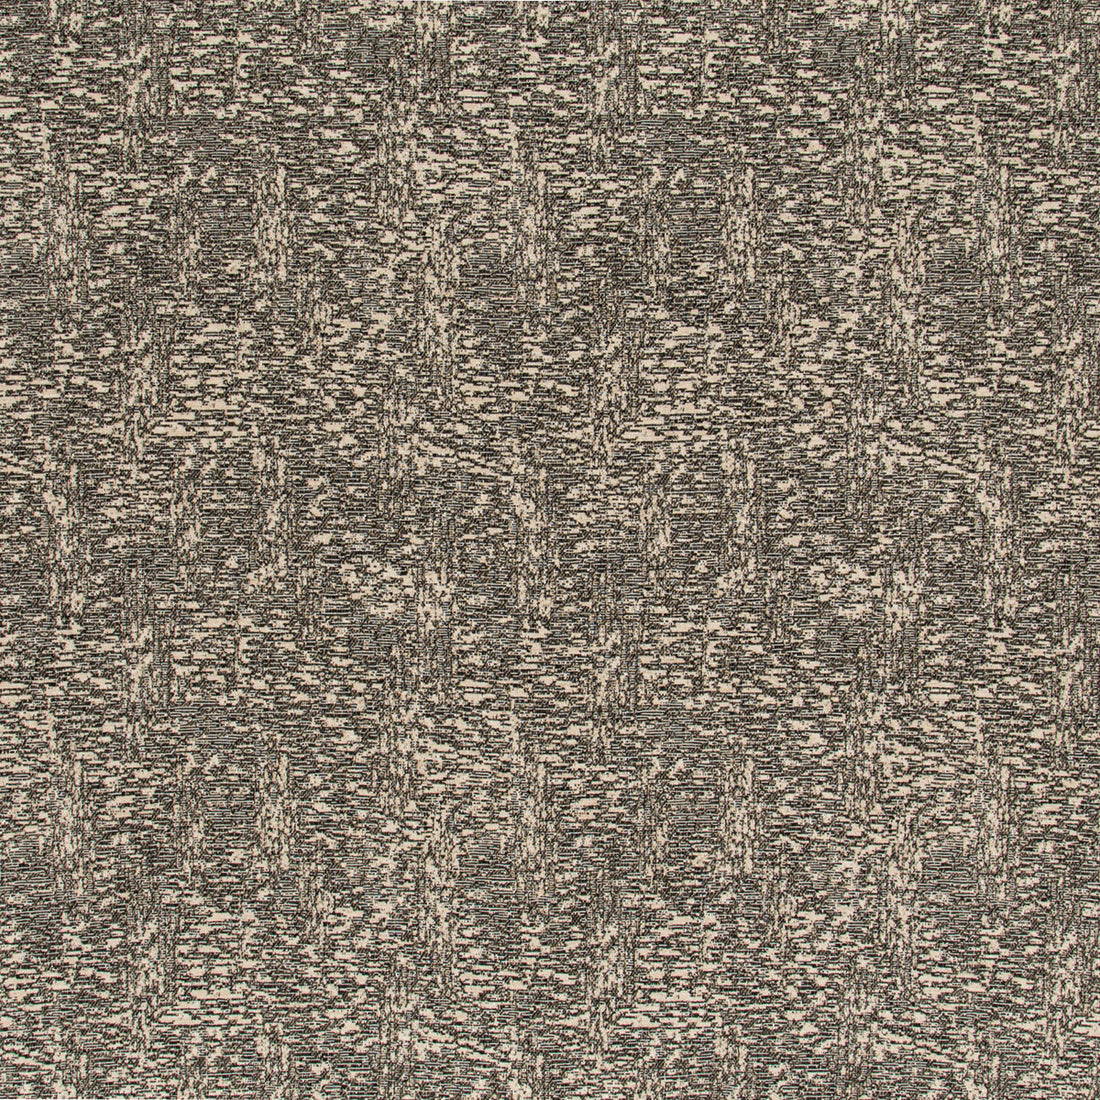 Lj Grw fabric - pattern 2019146.168.0 - by Lee Jofa Modern in the Kw Terra Firma III Indoor Outdoor collection